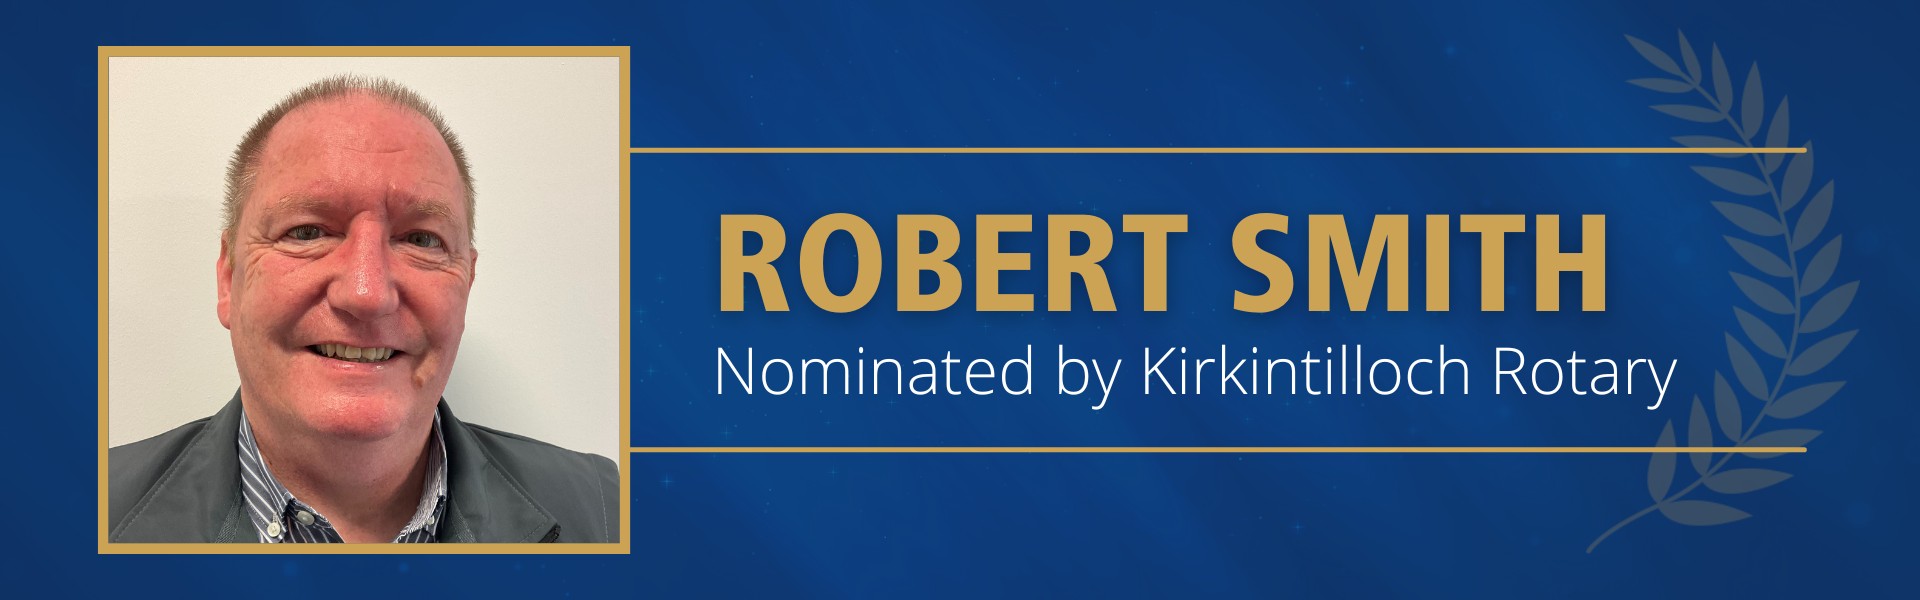 Robert Smith Nominated by Kirkintilloch Rotary